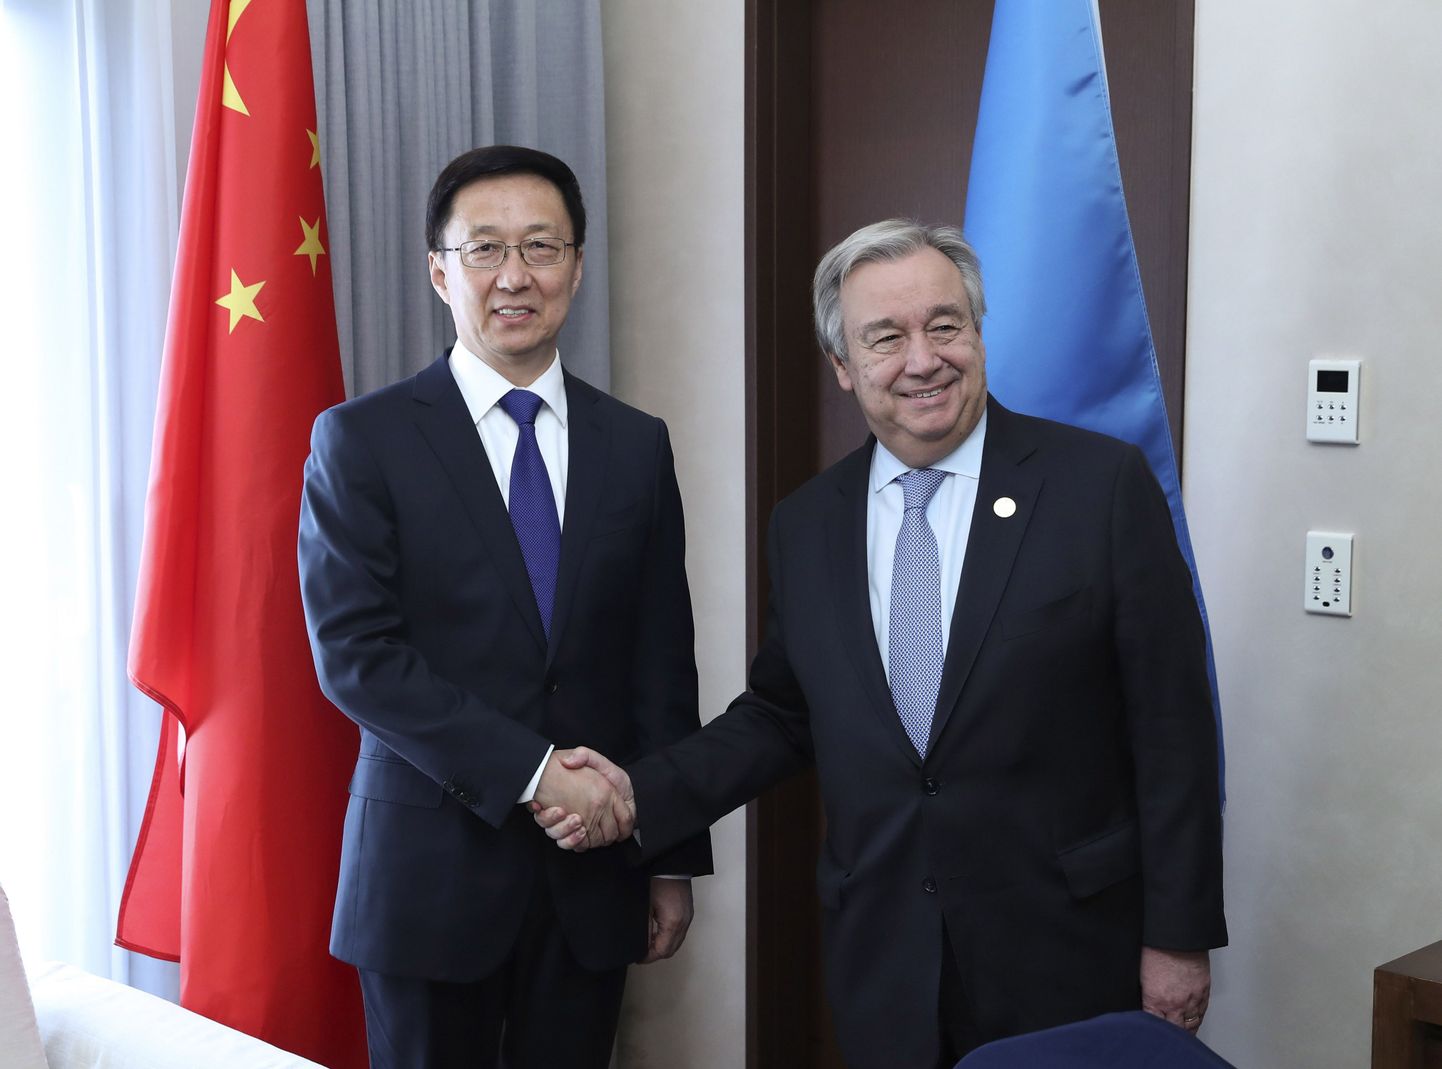 ÜRO peasekretär António Guterres reedel Lõuna-Koreas Pyeongchangis kohtumas Hiina presidendi Xi Jinpingi eriesindaja Han Zhengiga.